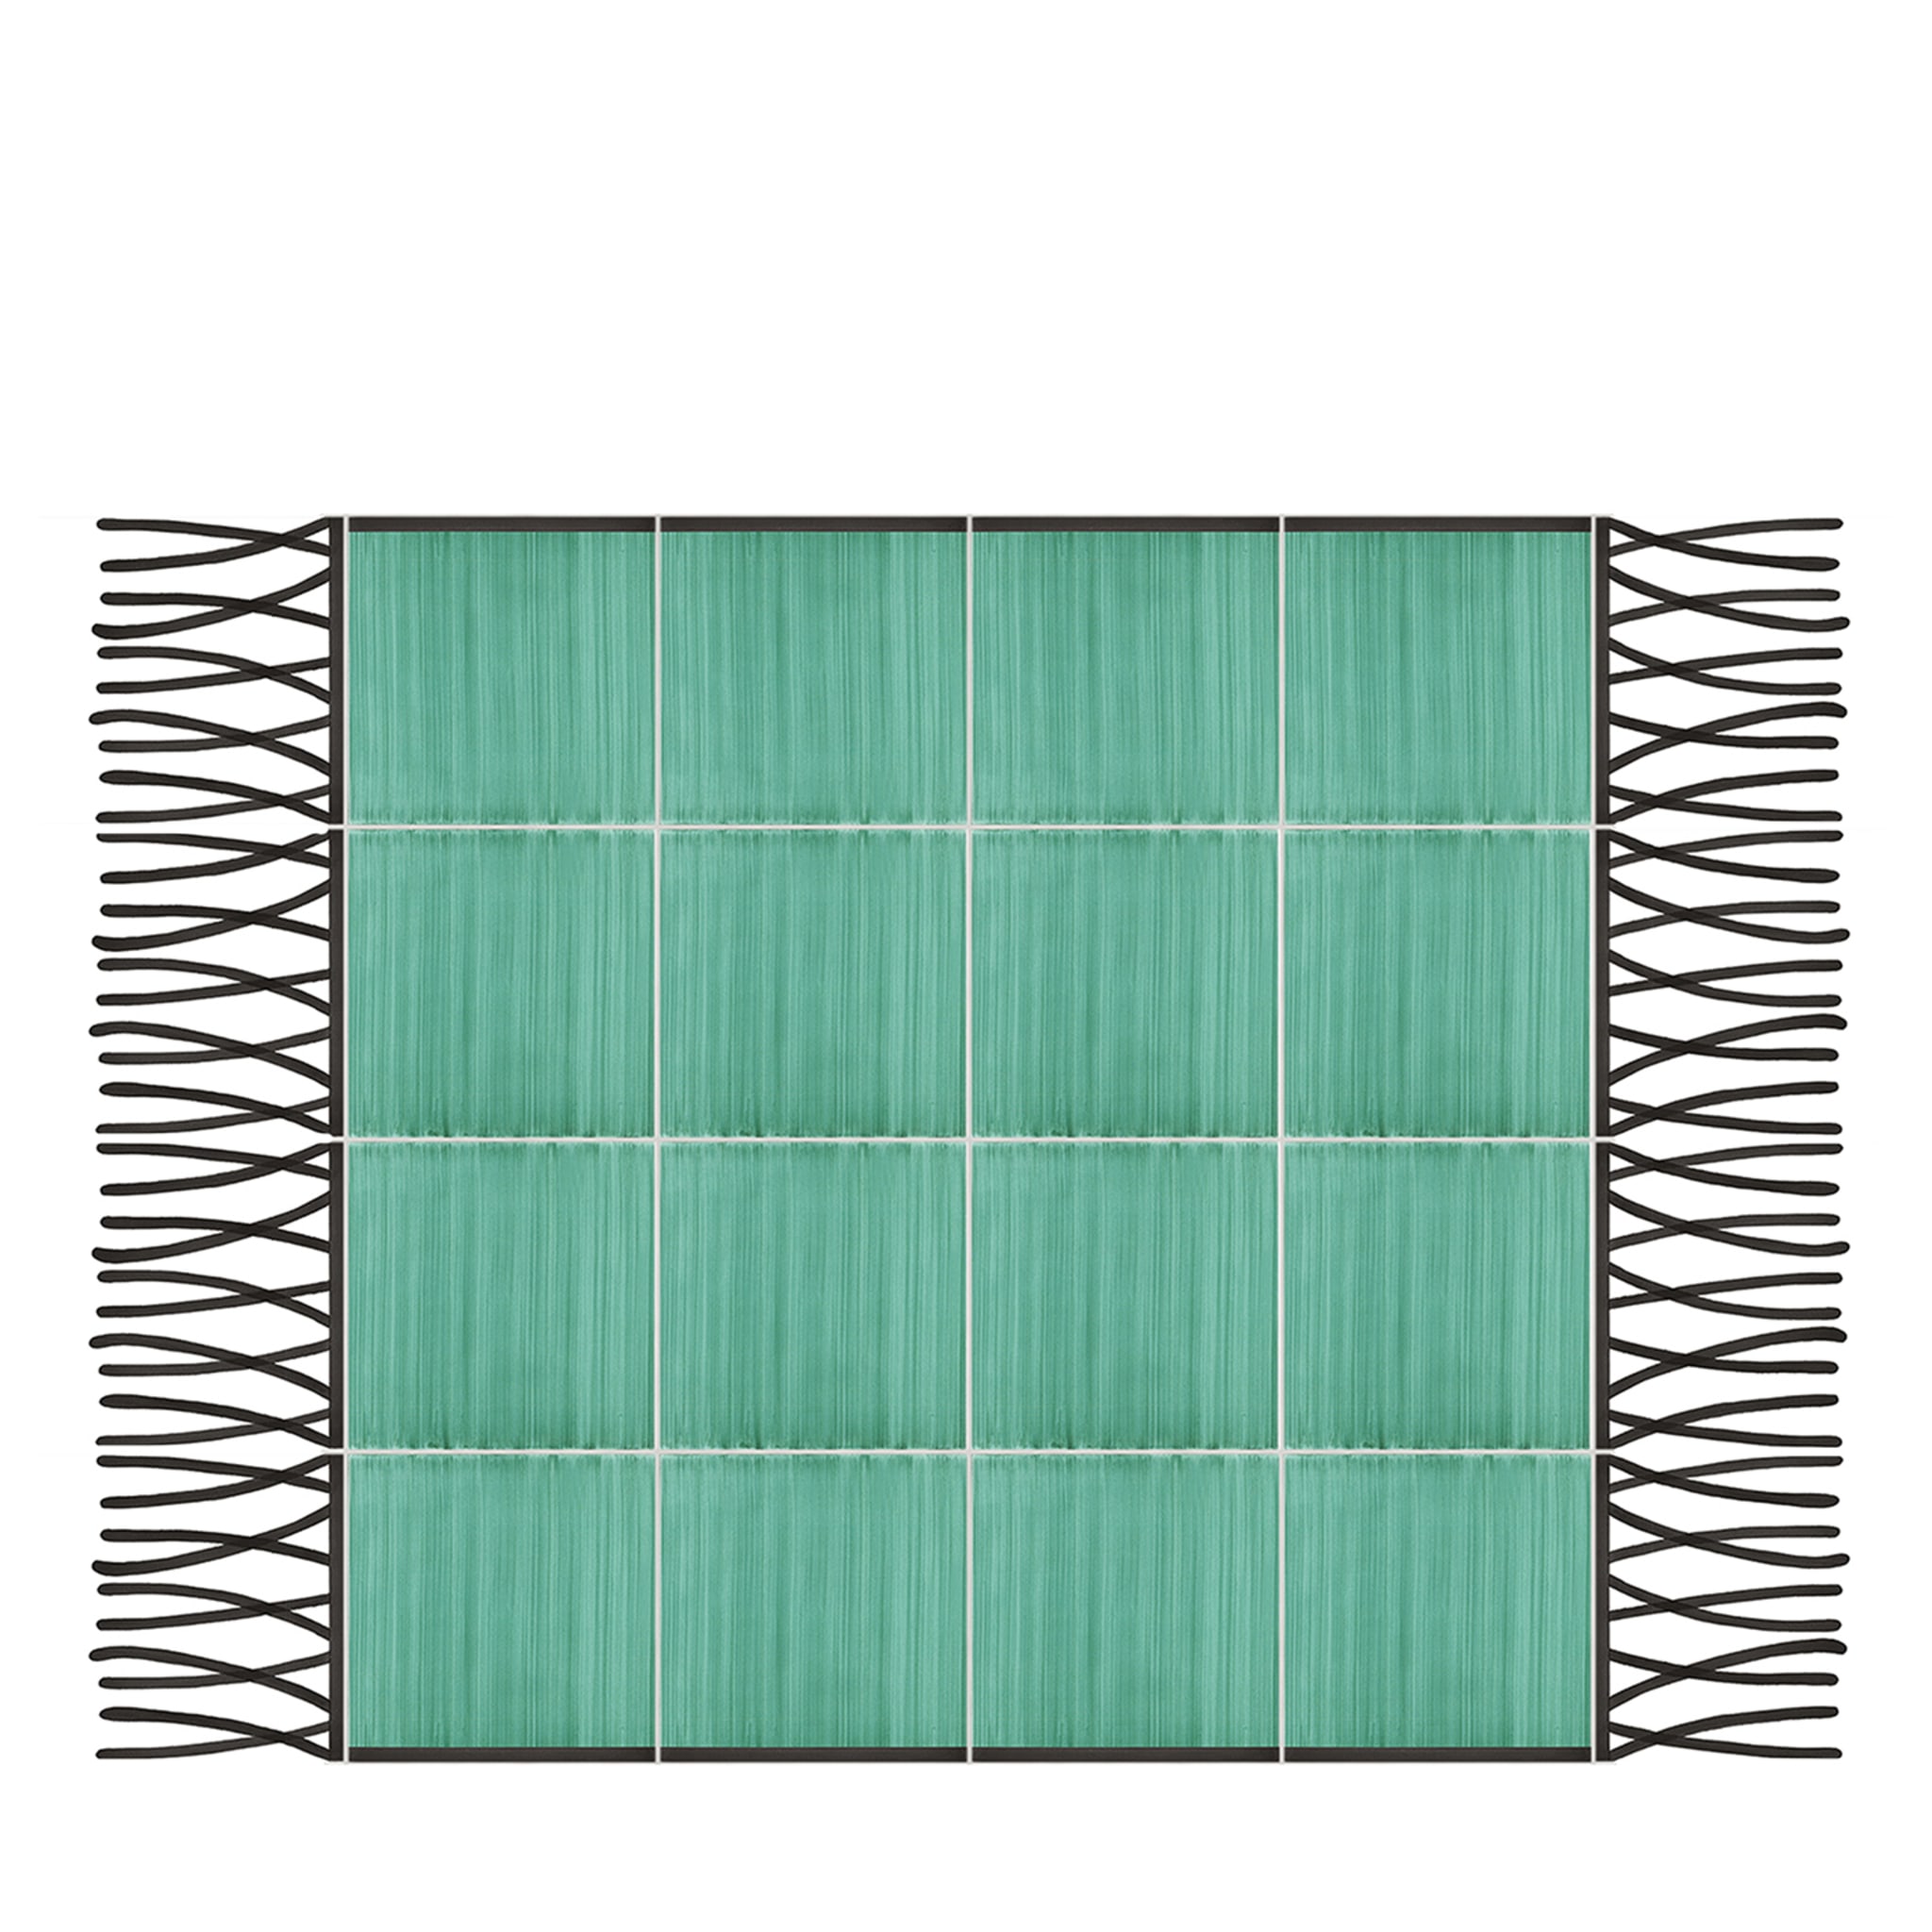 Tapis Total Vert Composition Céramique de Giuliano Andrea dell'Uva 120 X 80 avec bordure noire - Vue principale